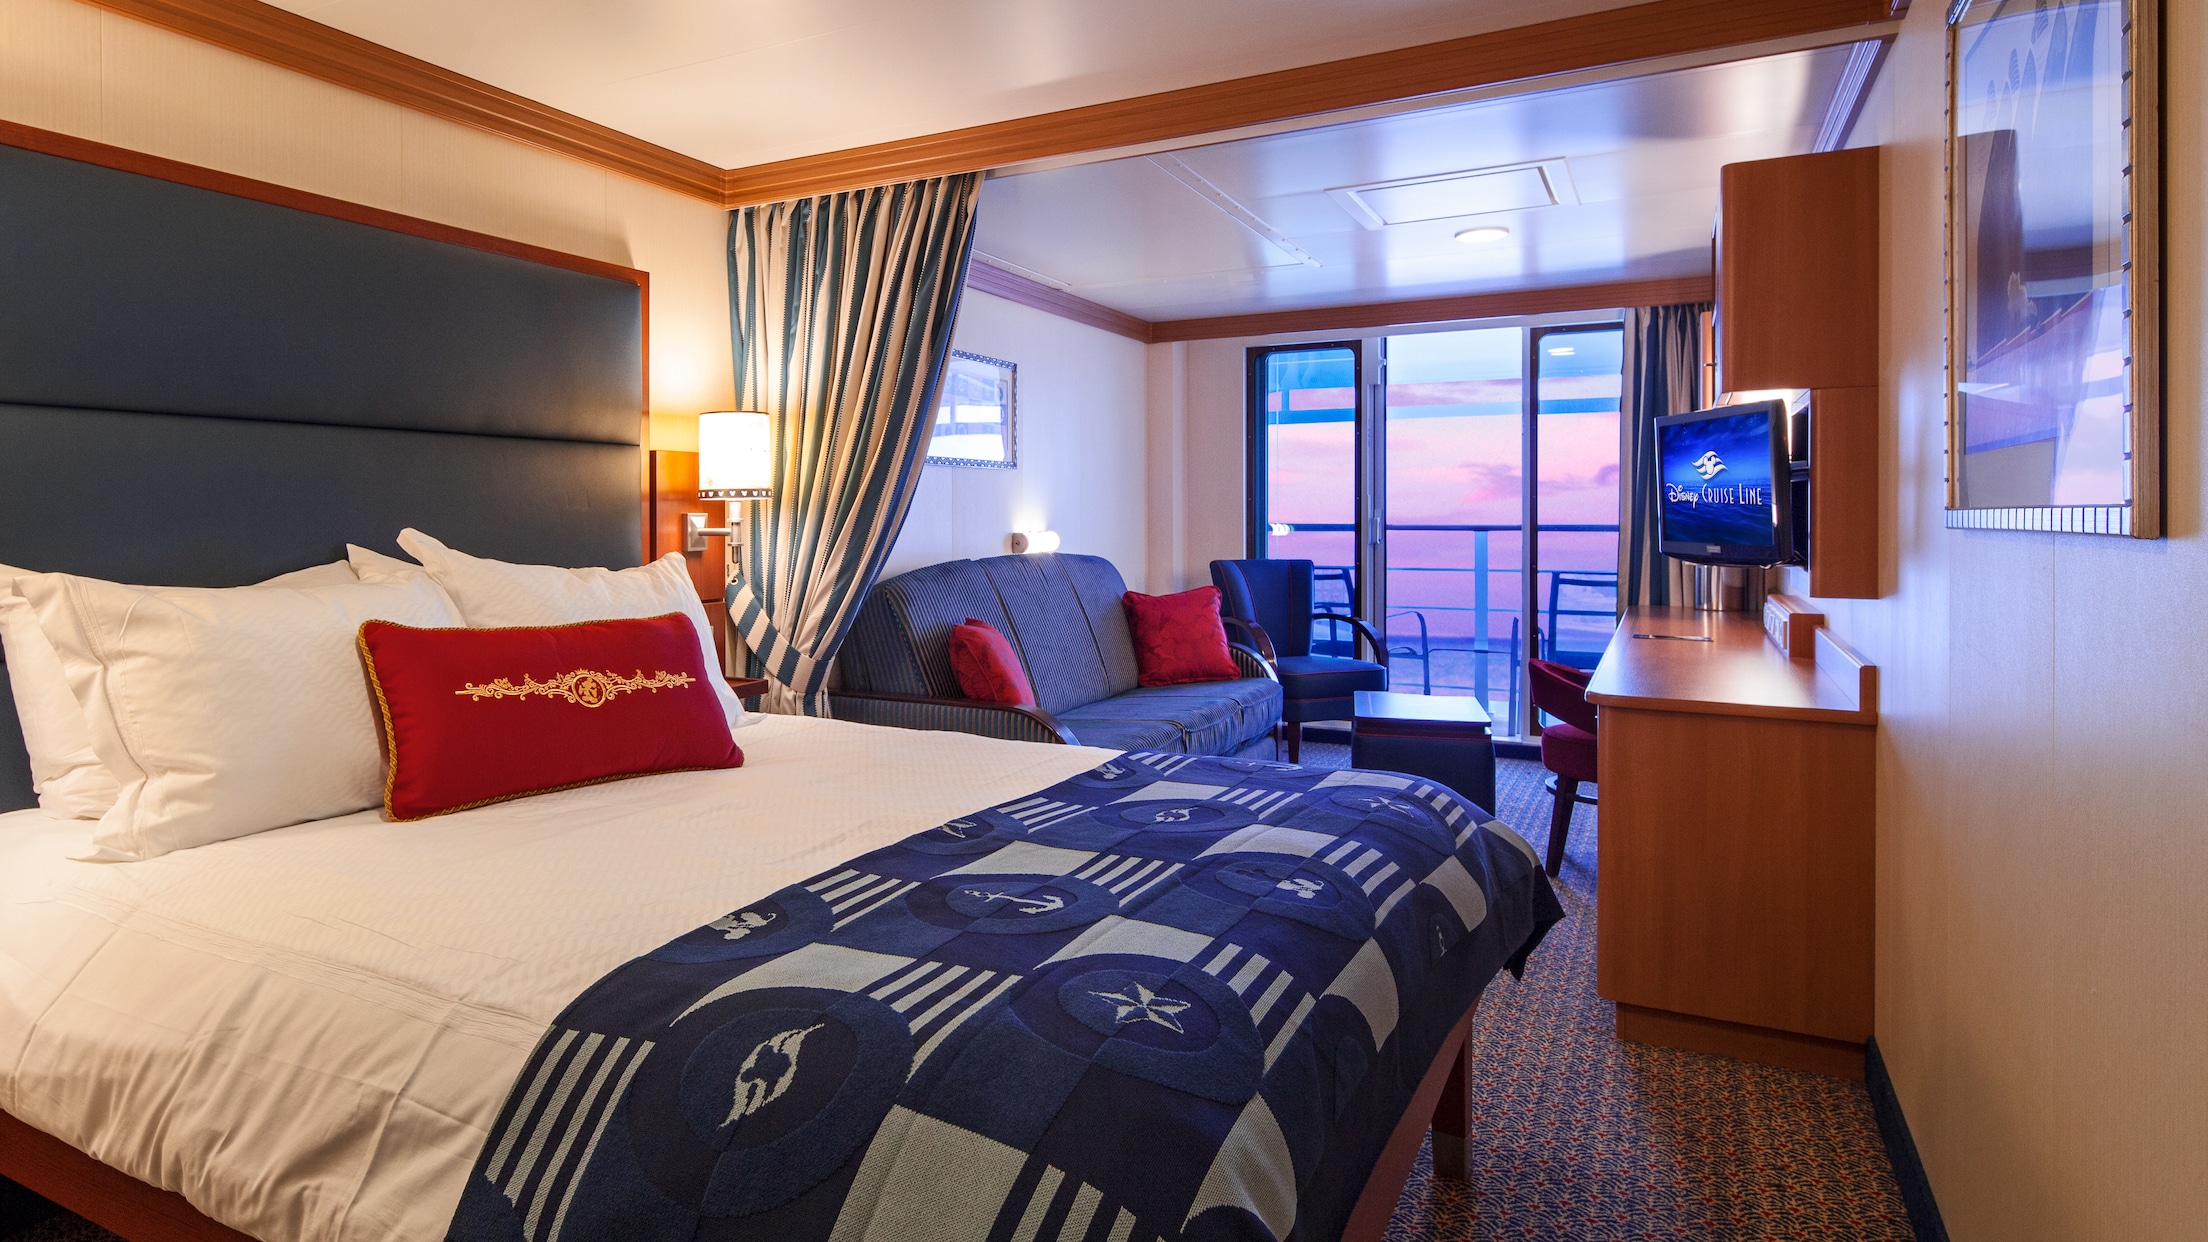 disney cruise rooms with balcony